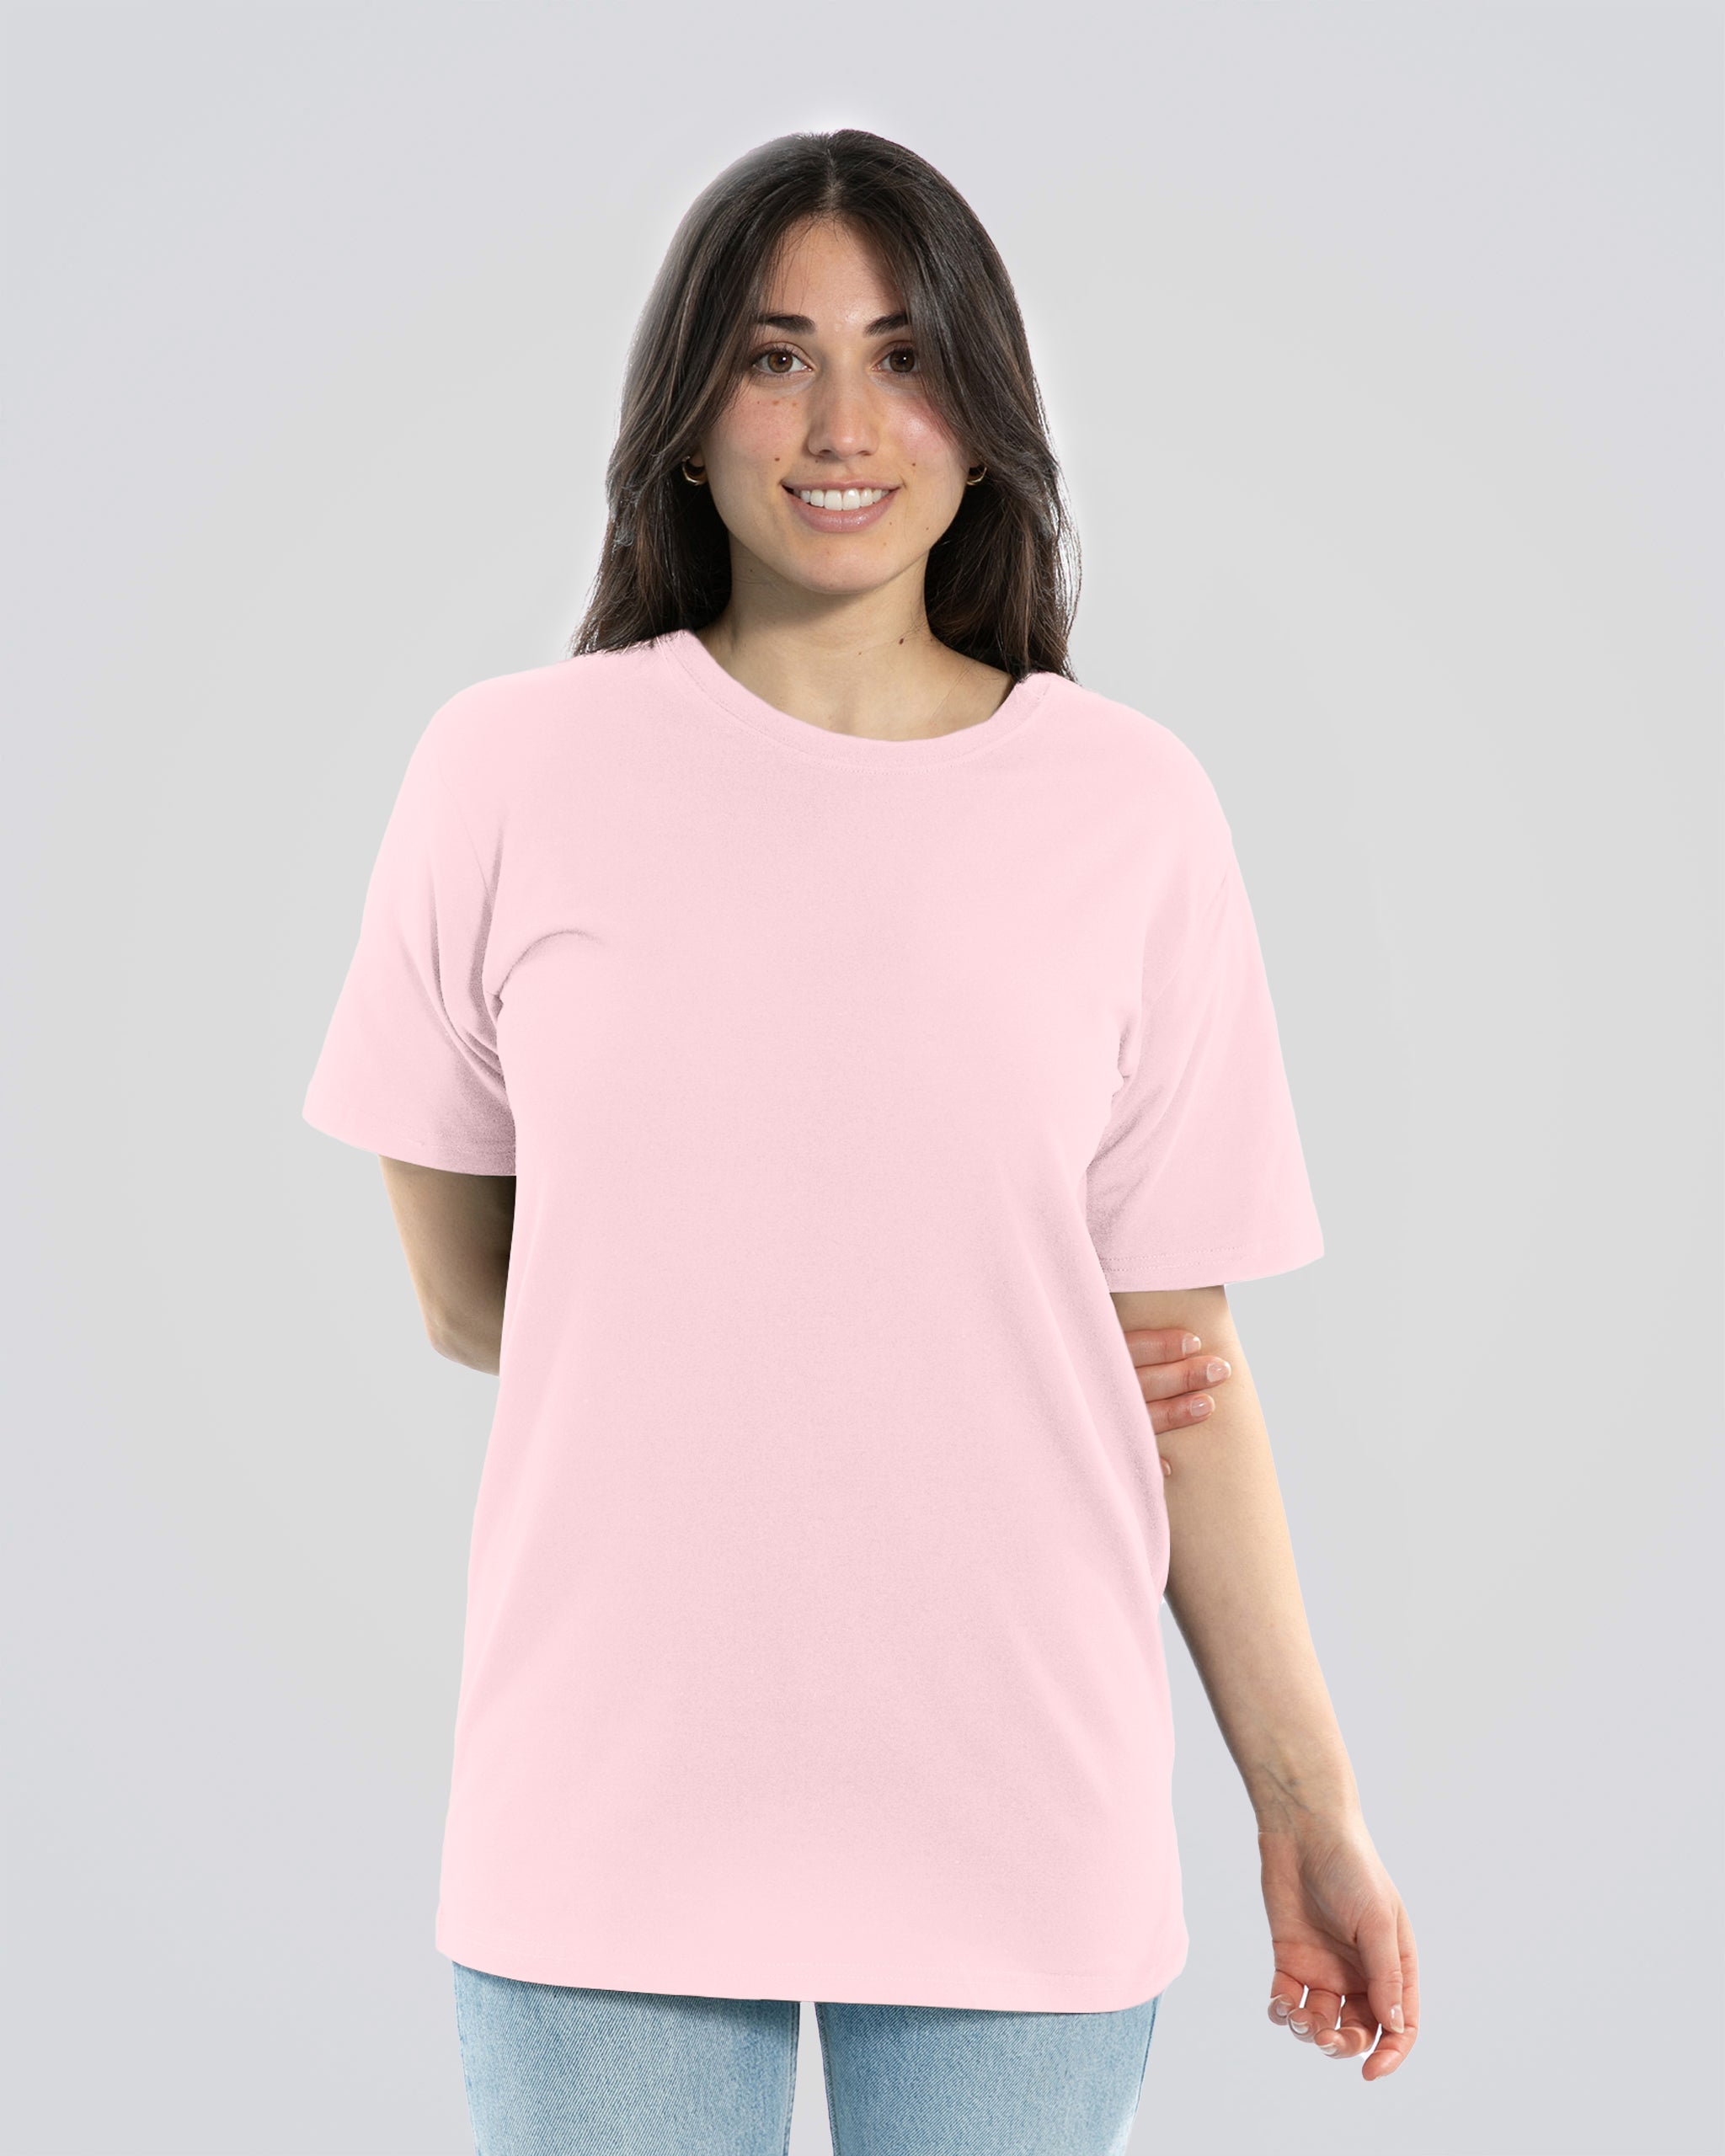 Pink - Women's Sweat Proof Shirt (Crewneck)